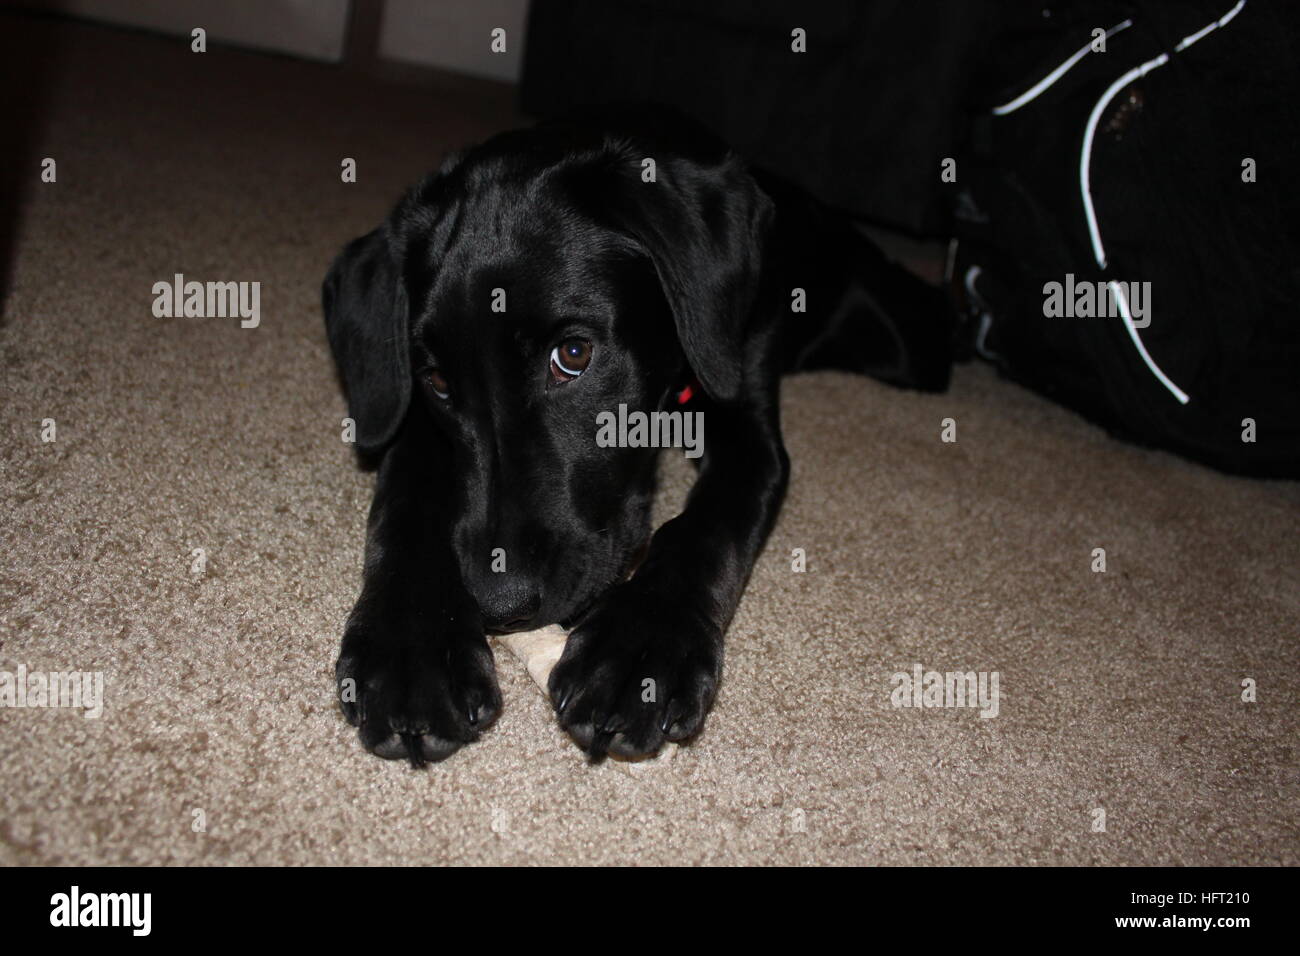 precious black labrador retriever giving the photographer her best puppy dog eyes Stock Photo